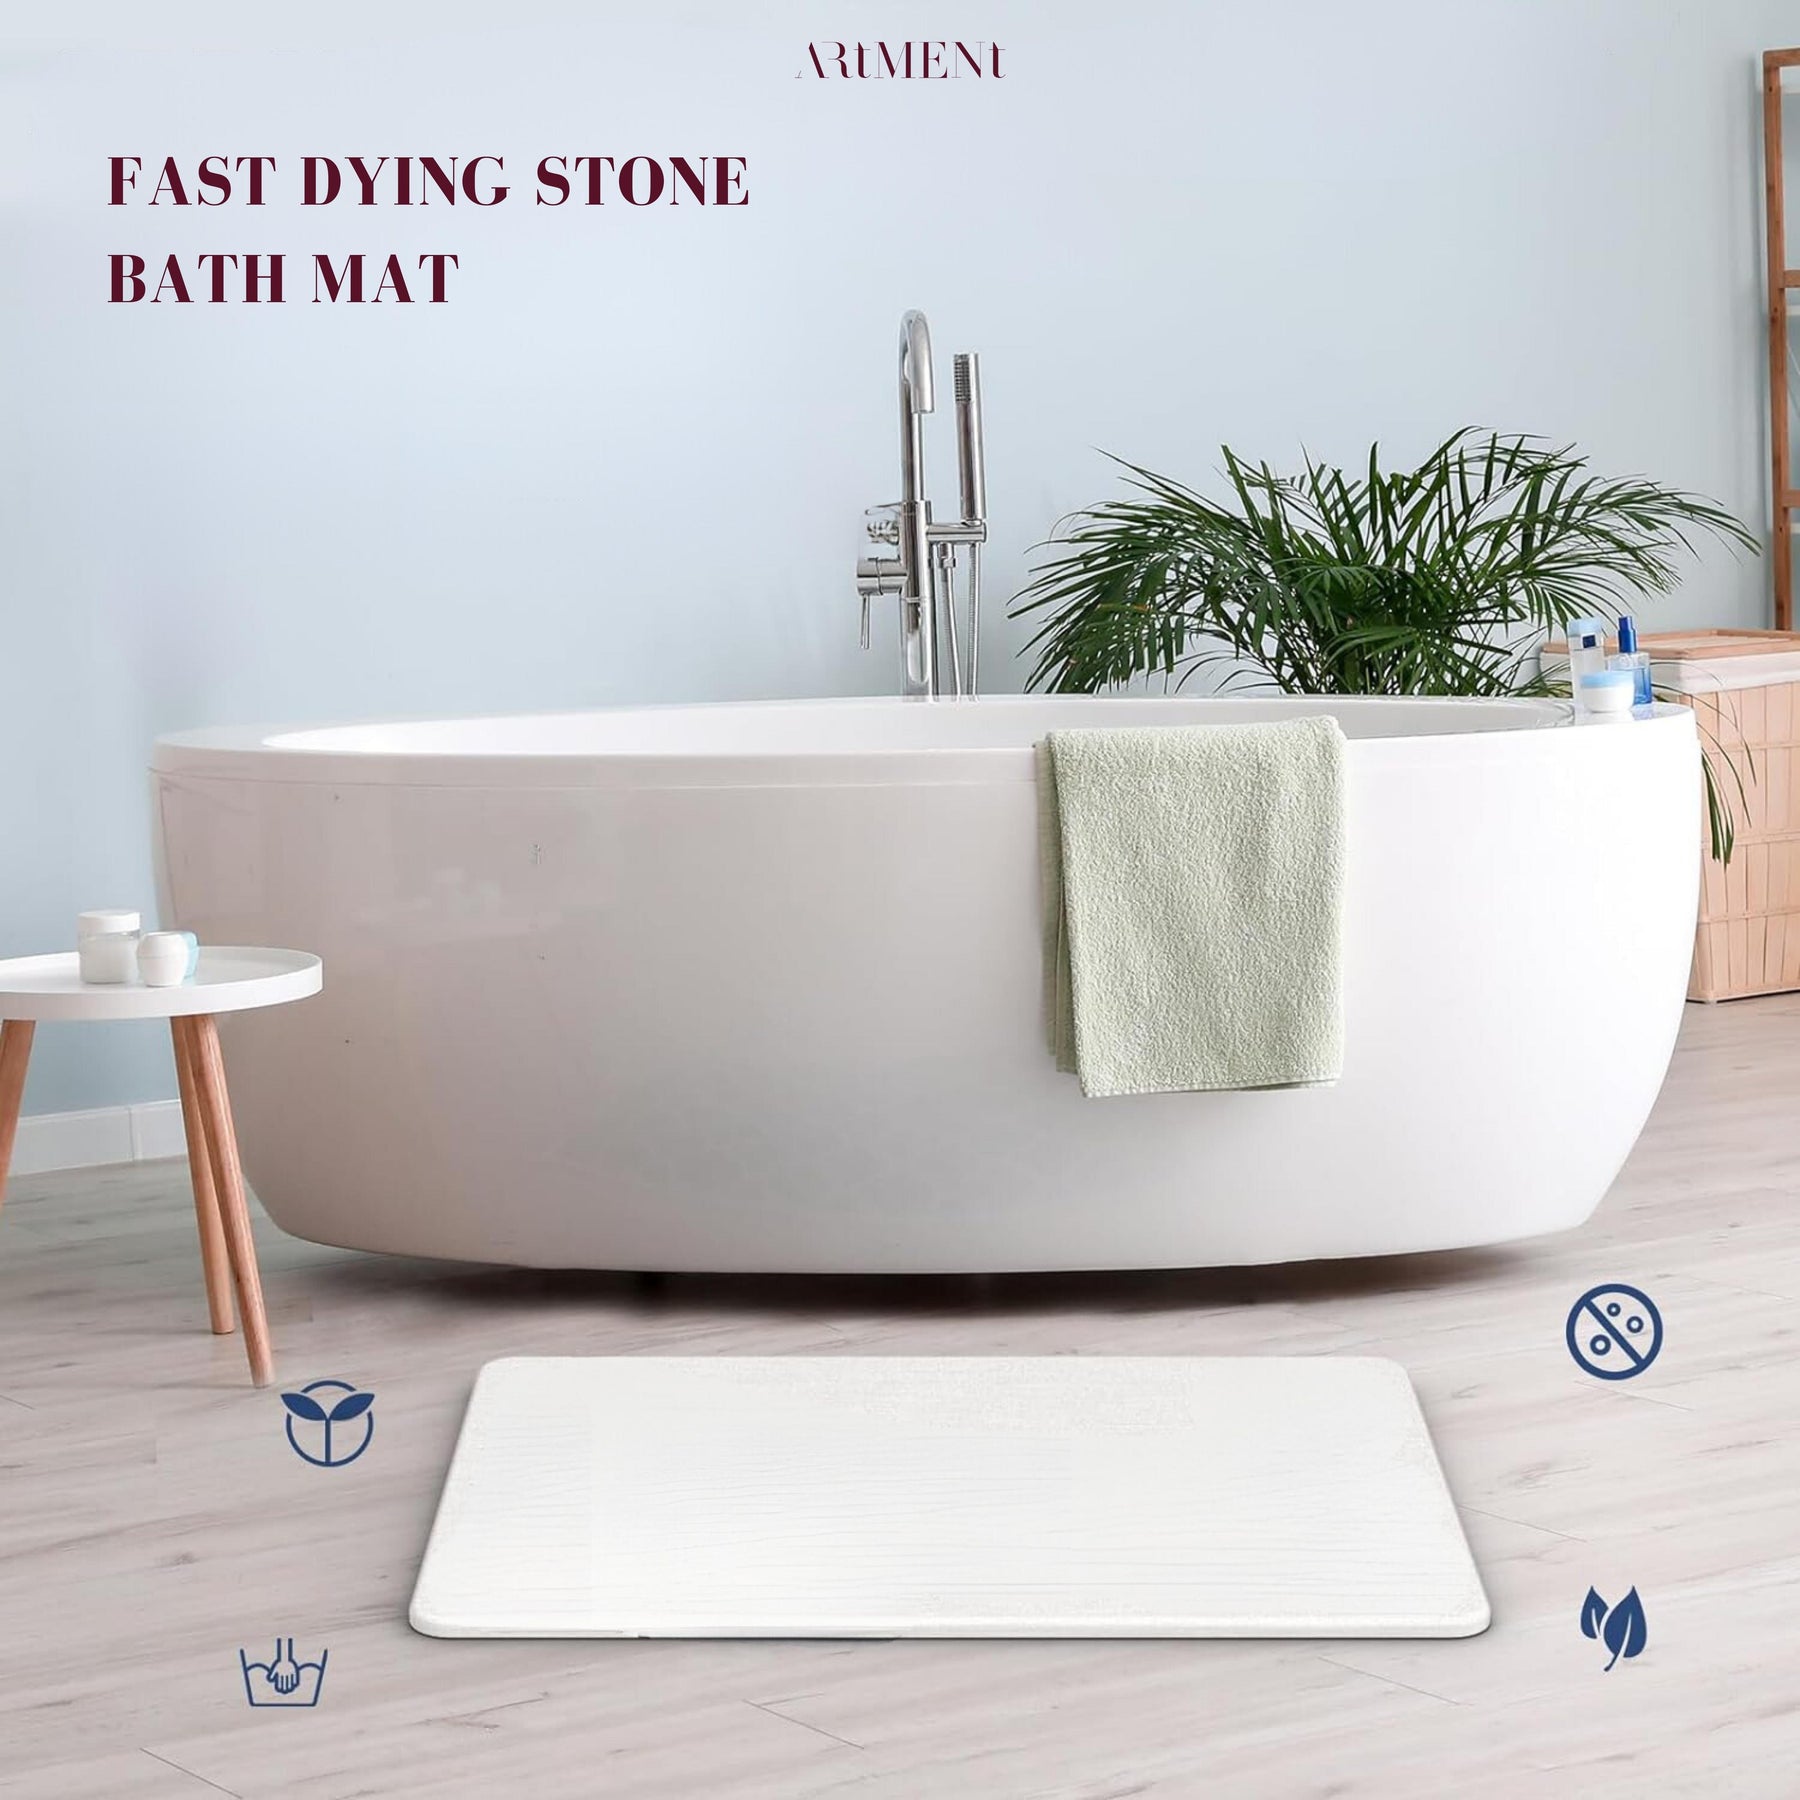 Kooteta Stone Bath Mat, natural diatomaceous earth bath mat, anti